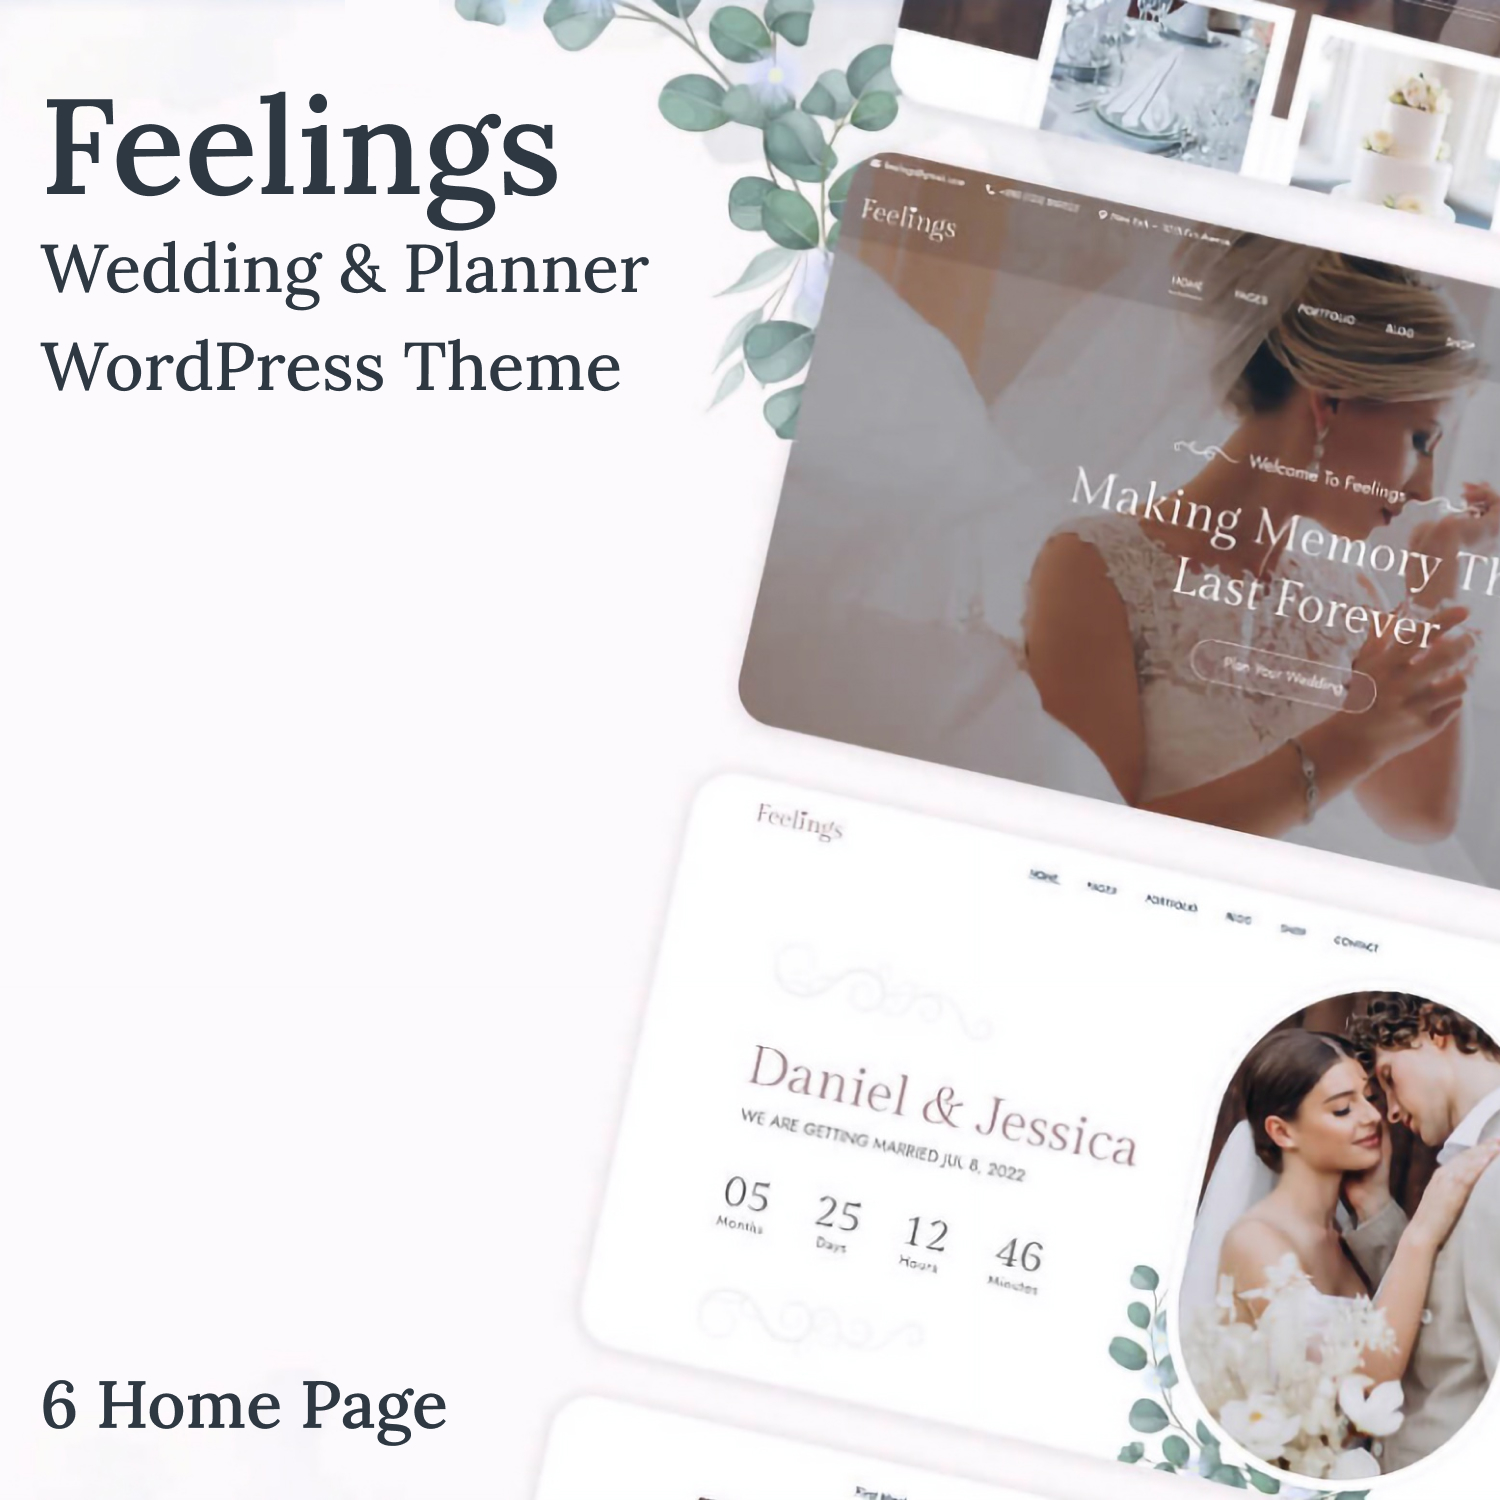 Preview feelings wedding planner wordpress theme.